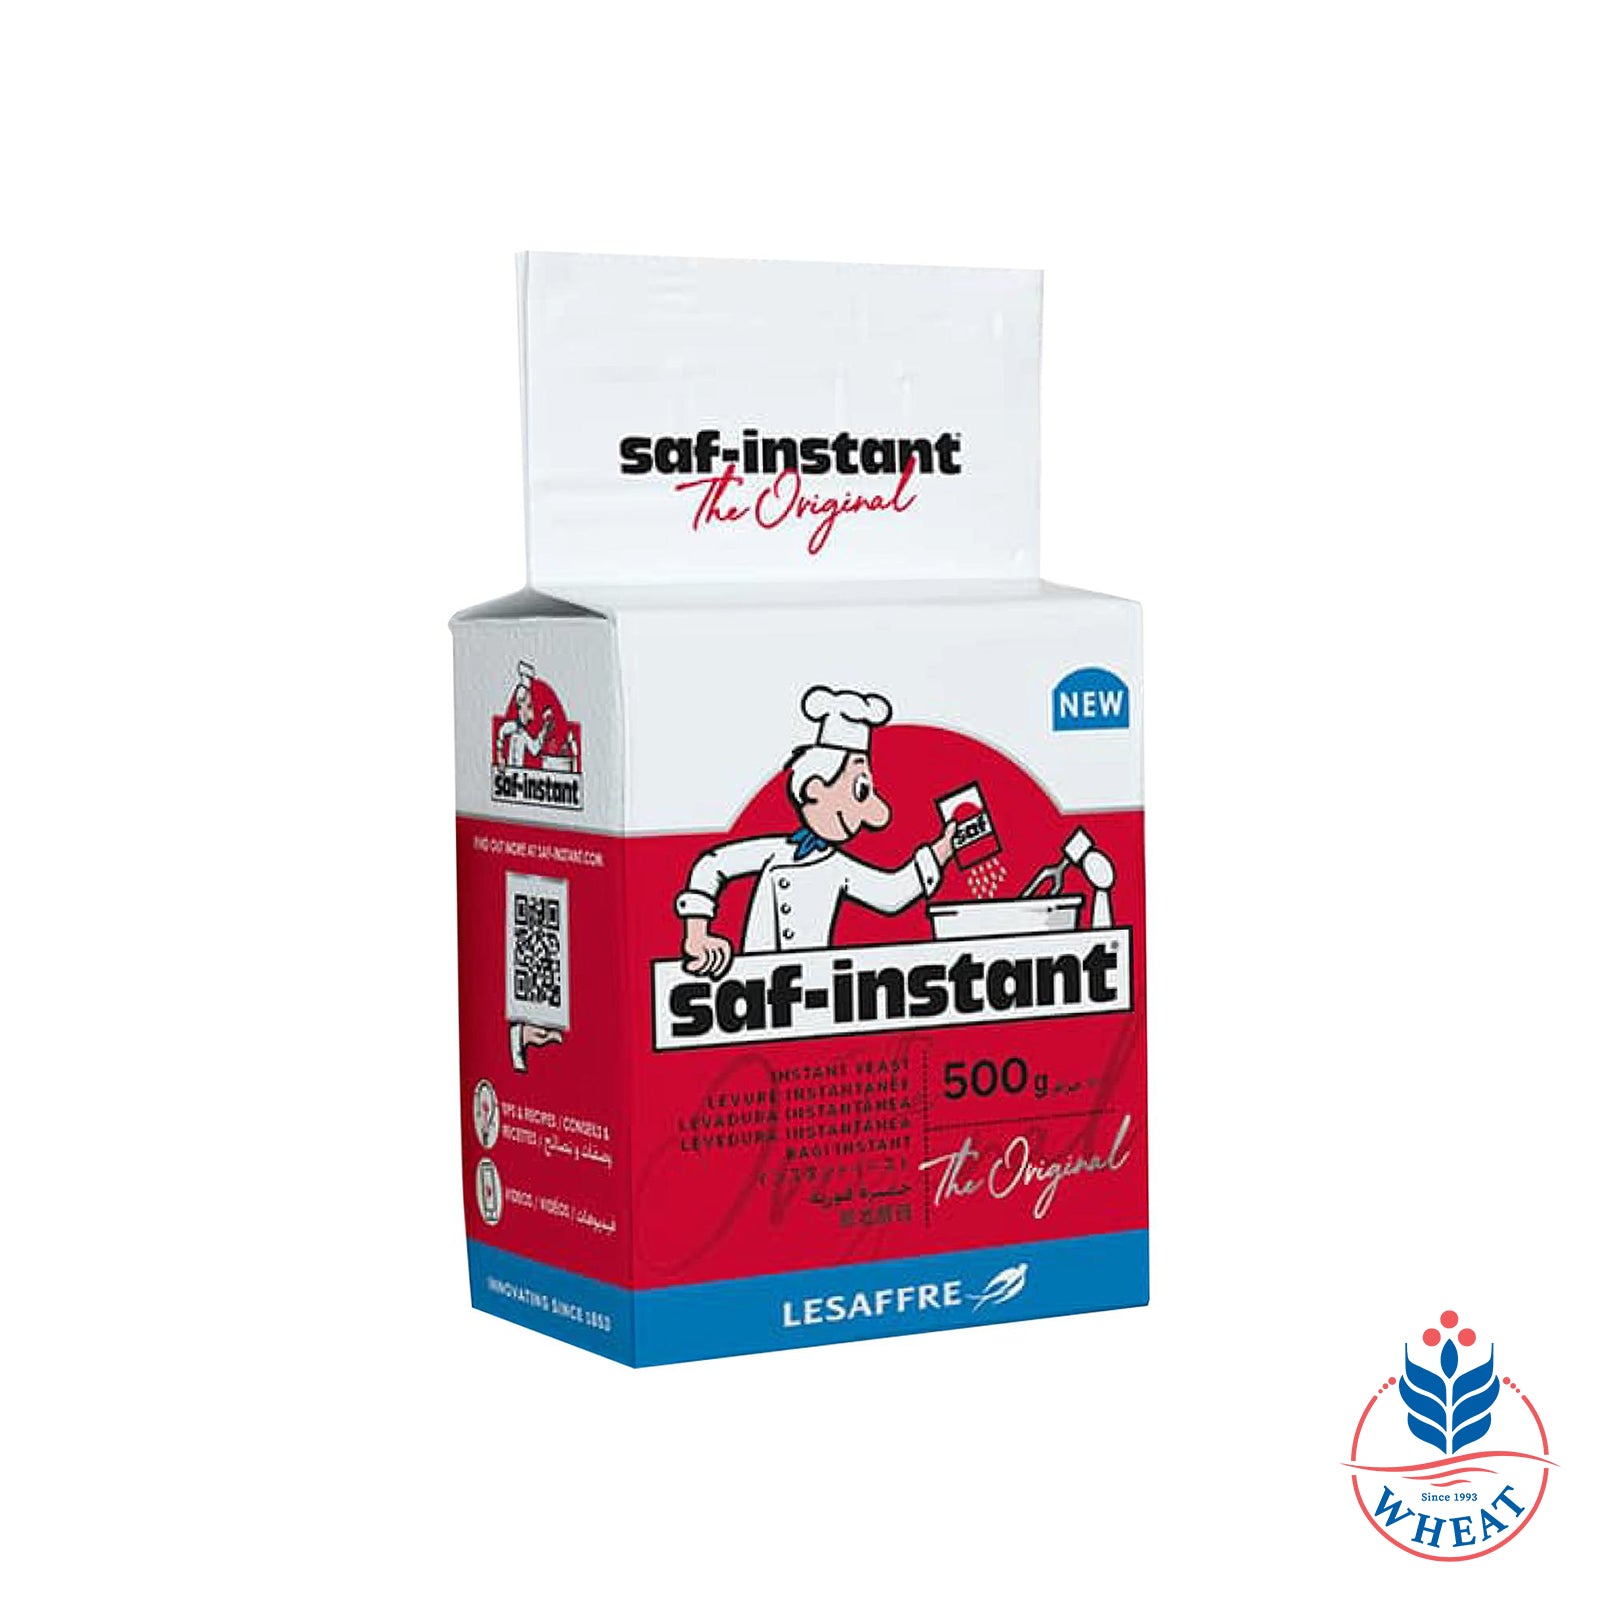 saf-instant Yeast Red Label 500g